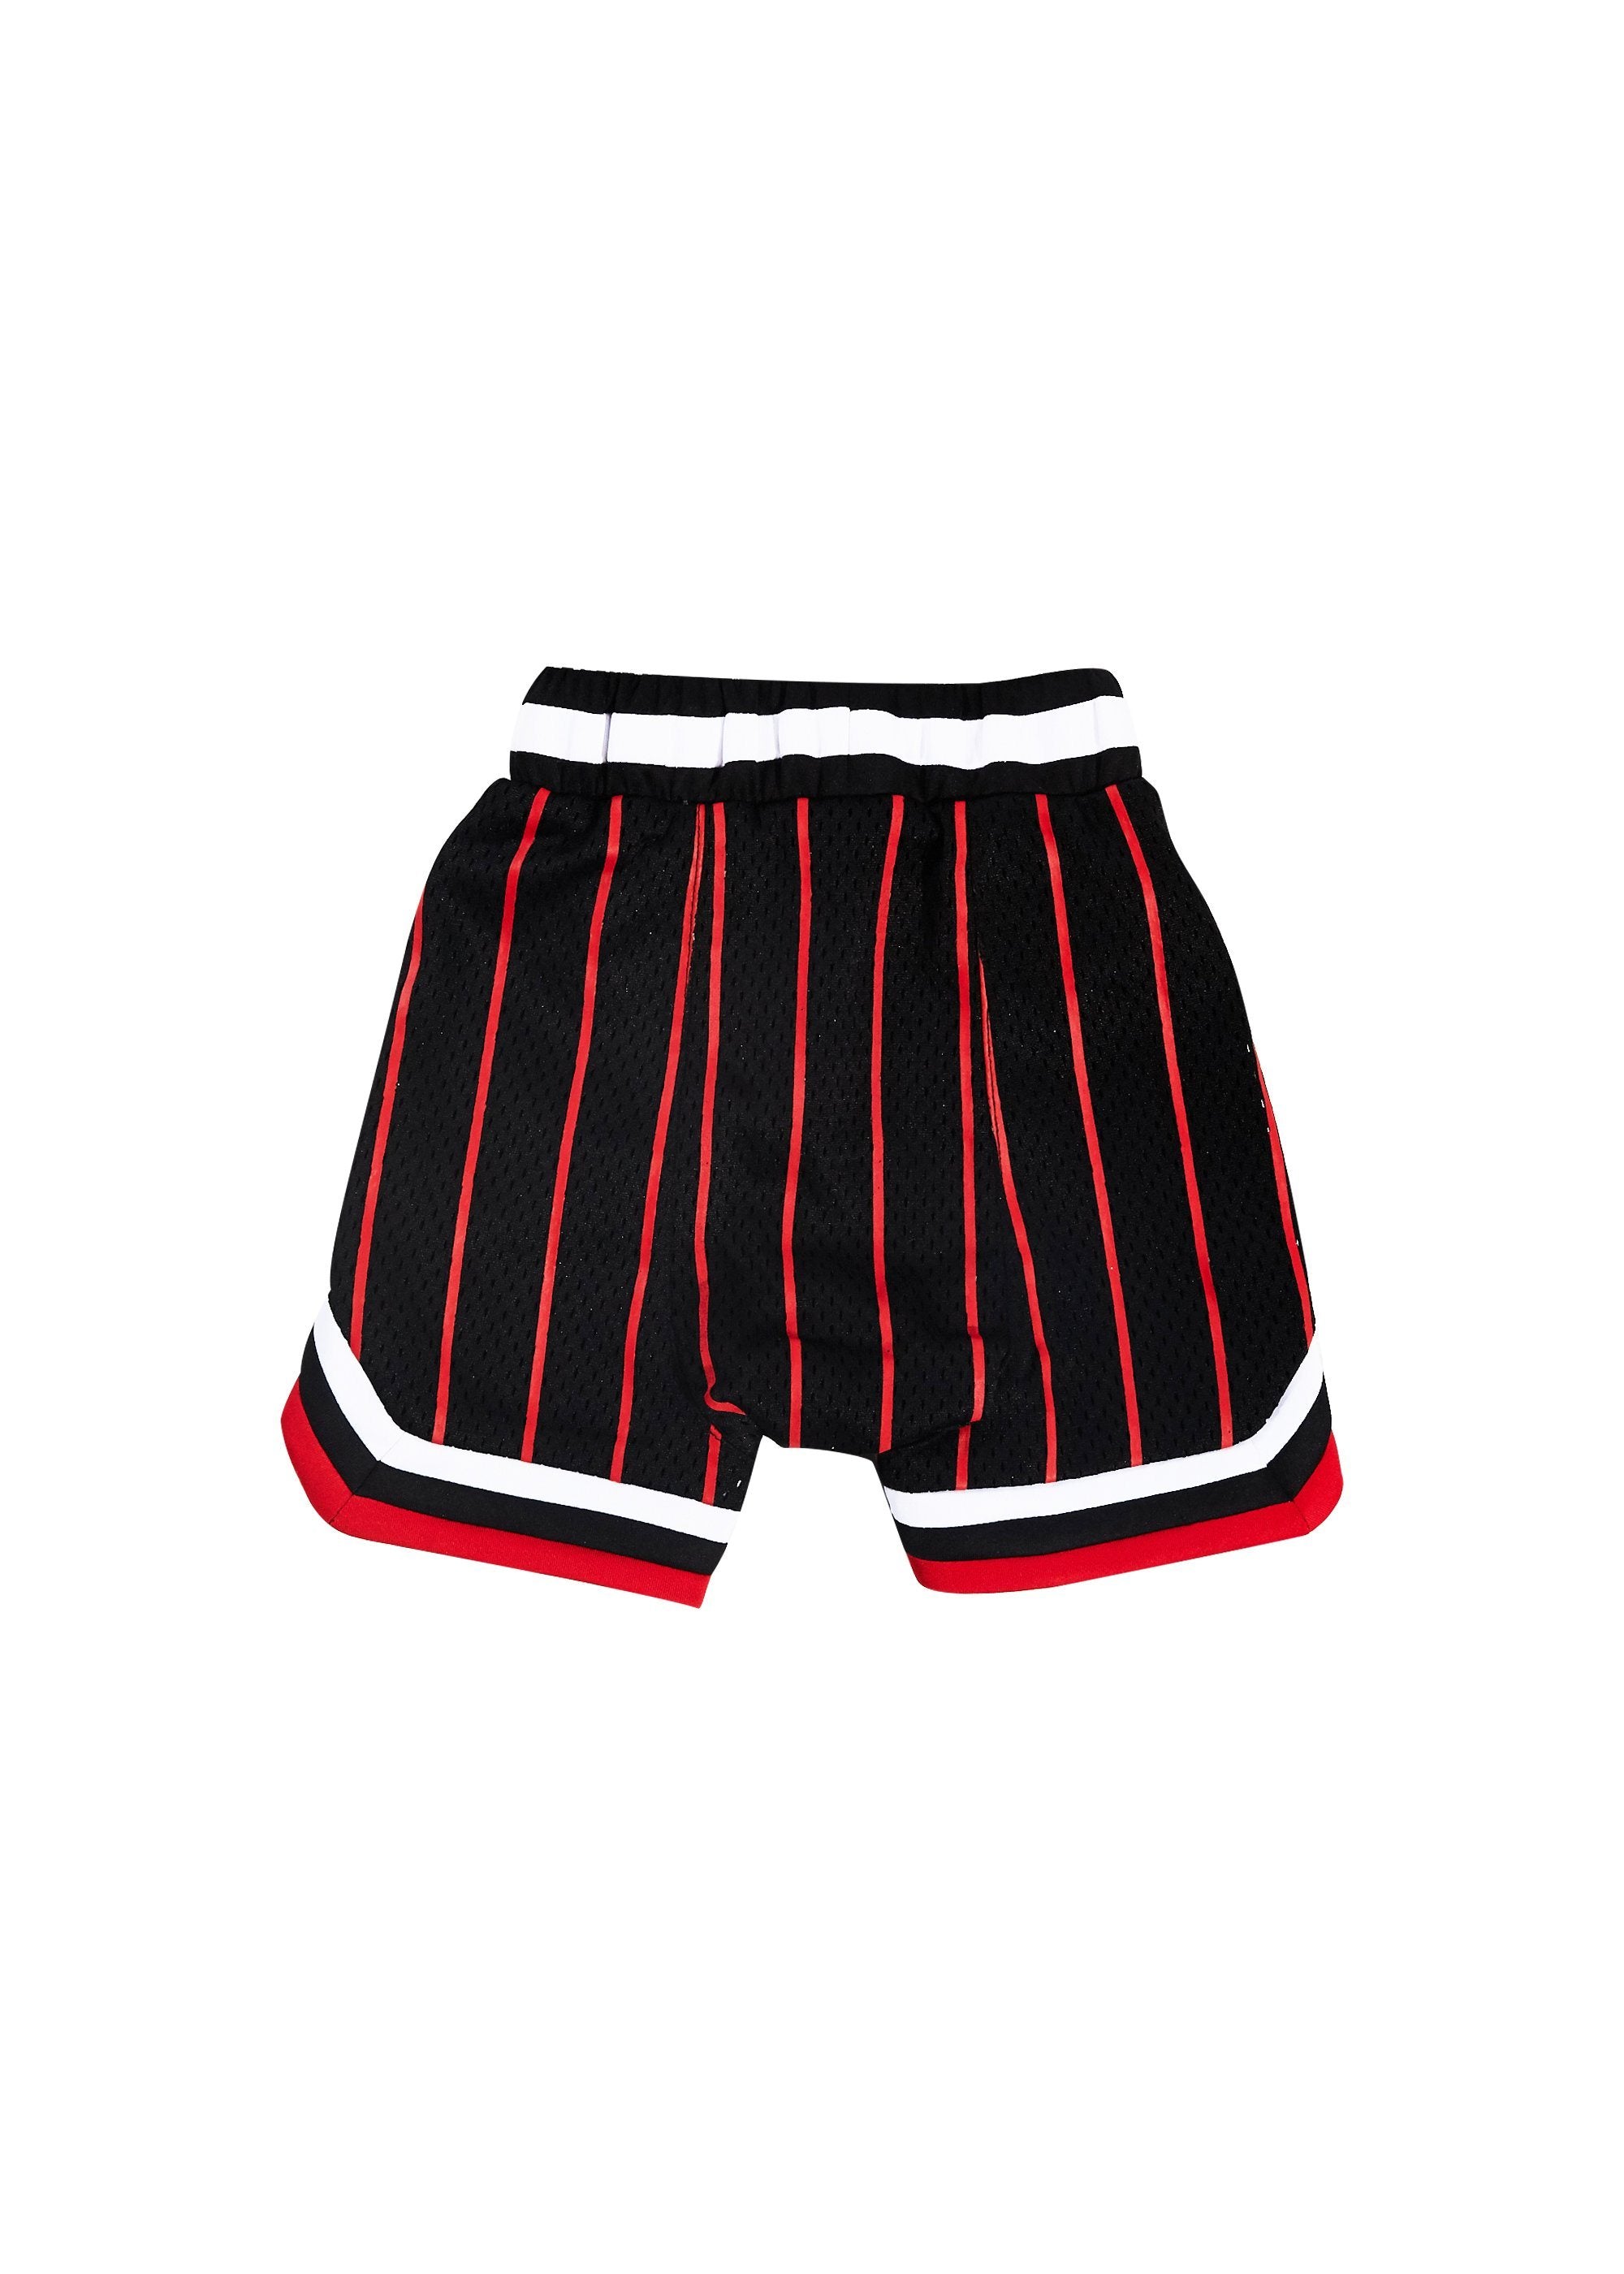 Wyst Basketball Shorts (Bulls Stripe Red) - Haus of JR